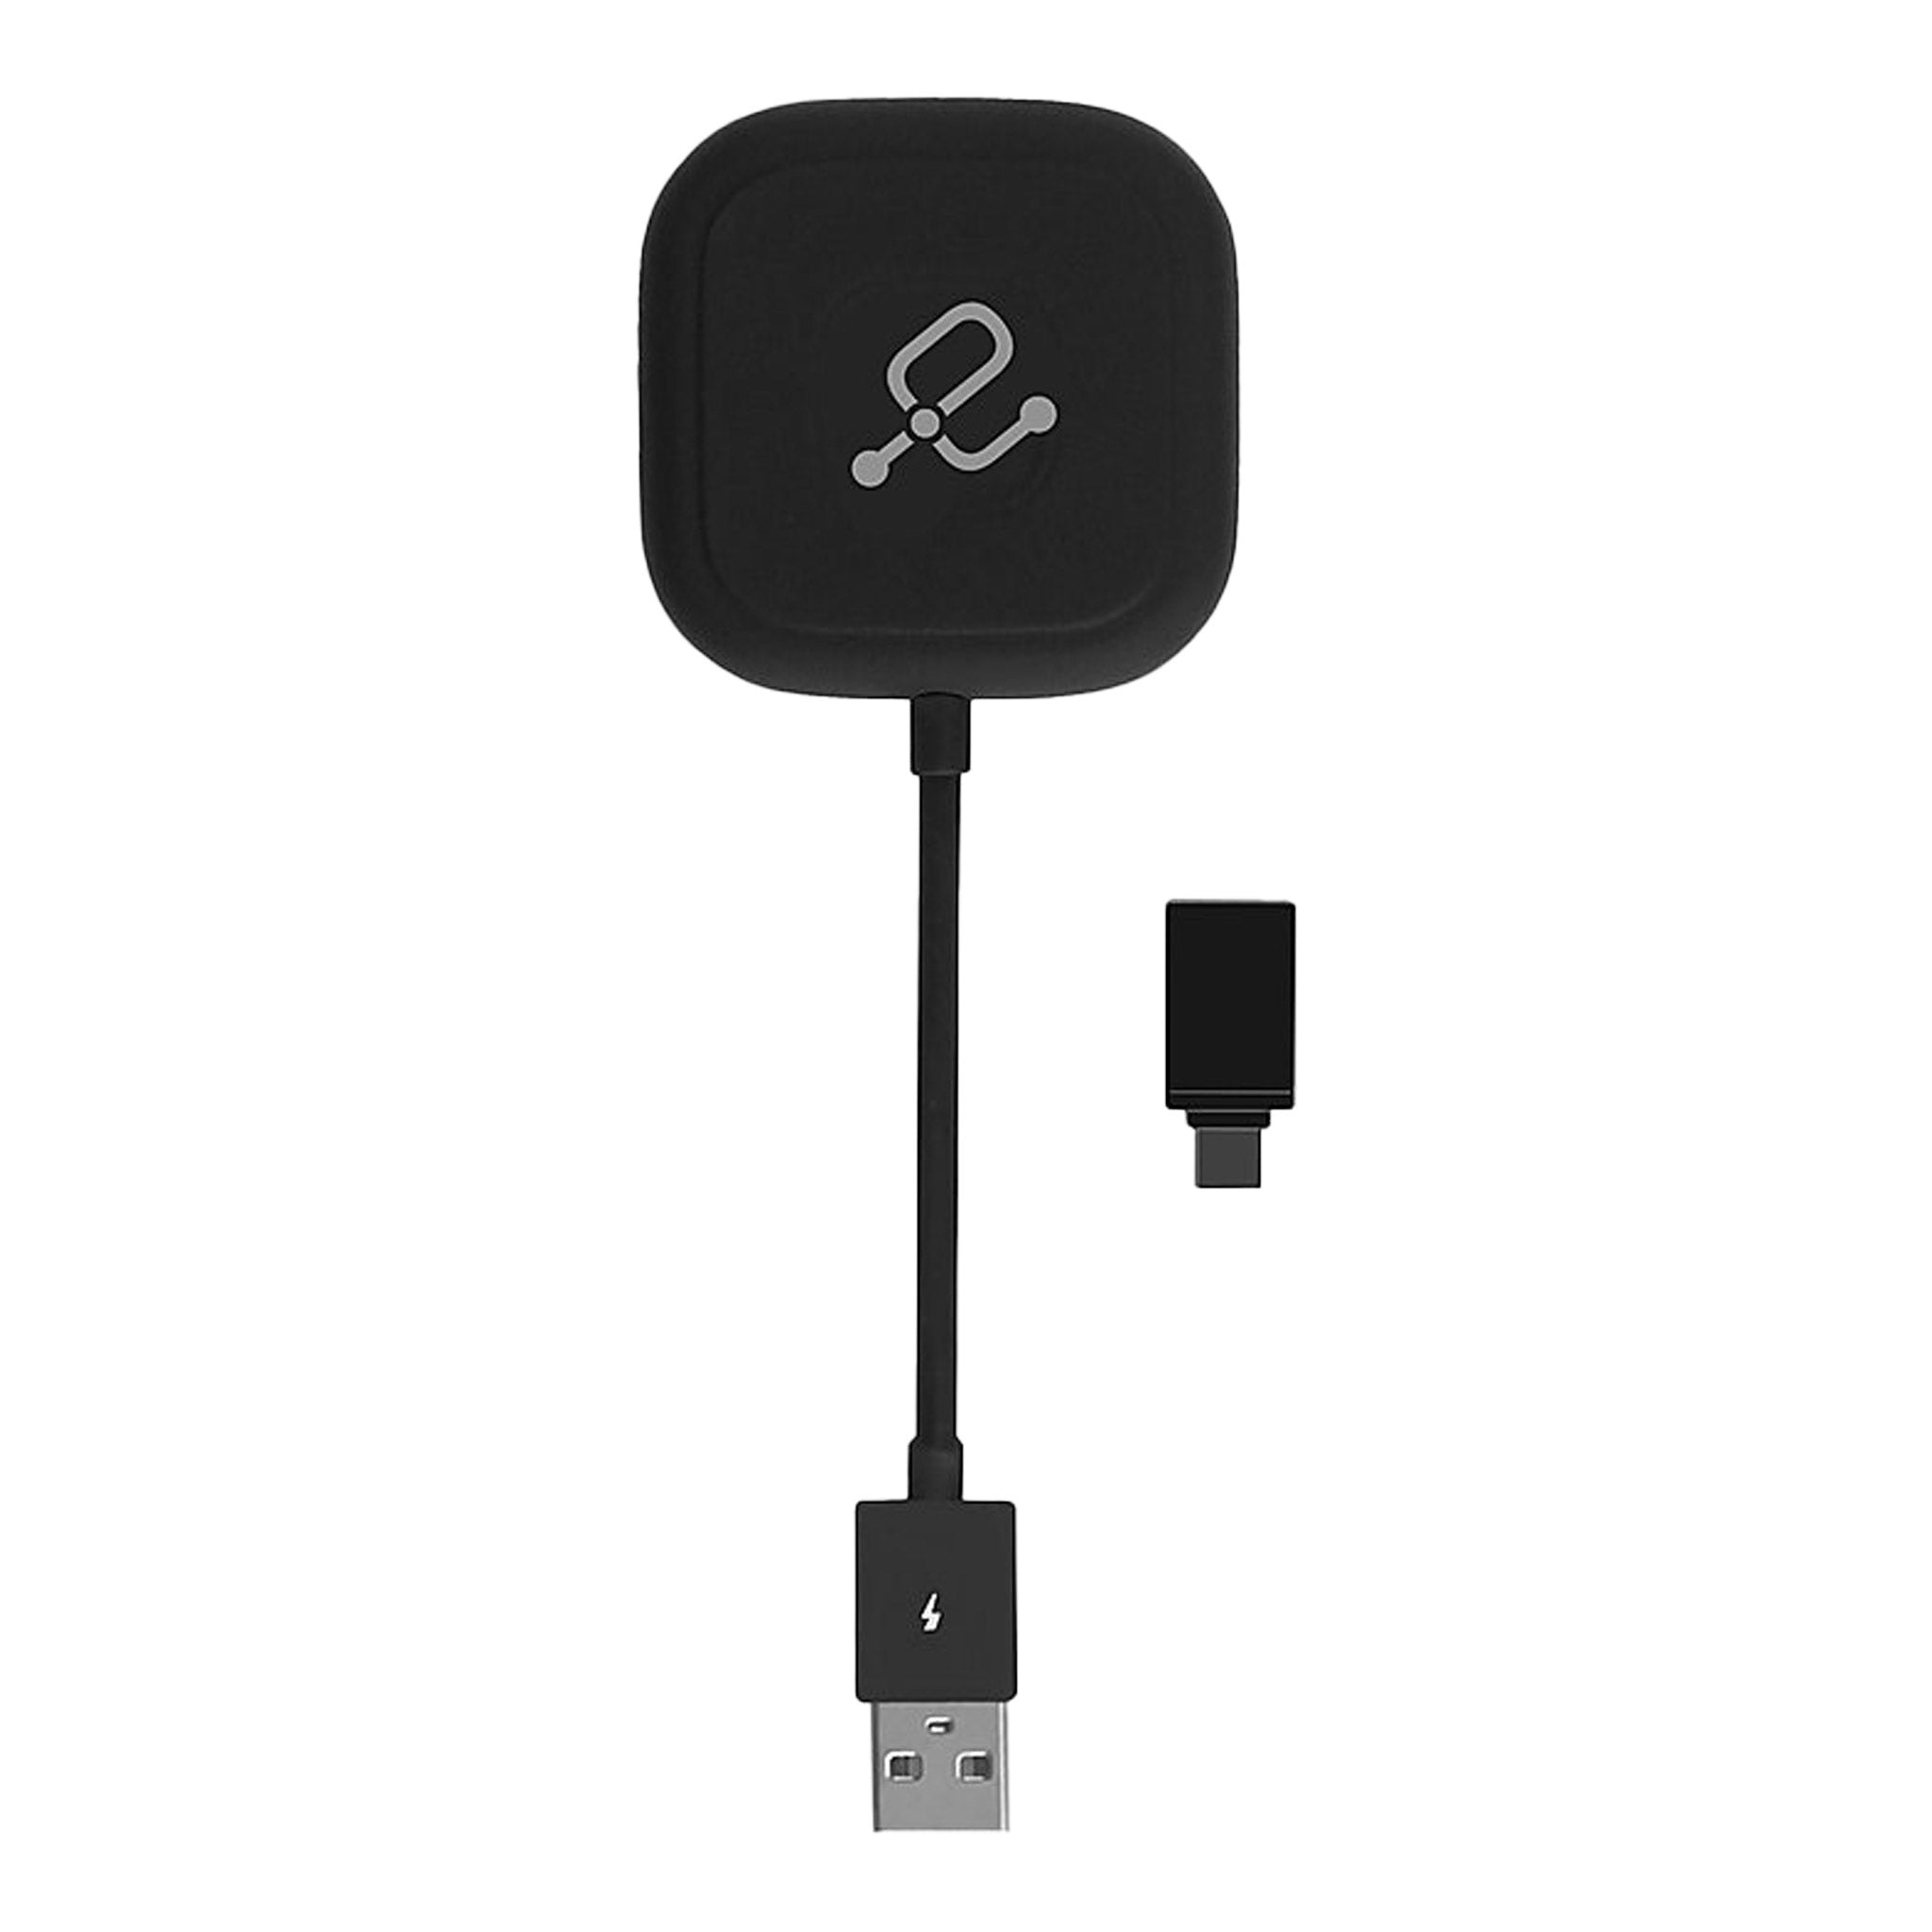 Aluratek AWCPA01FB Wireless Adapter for Apple CarPlay - Black